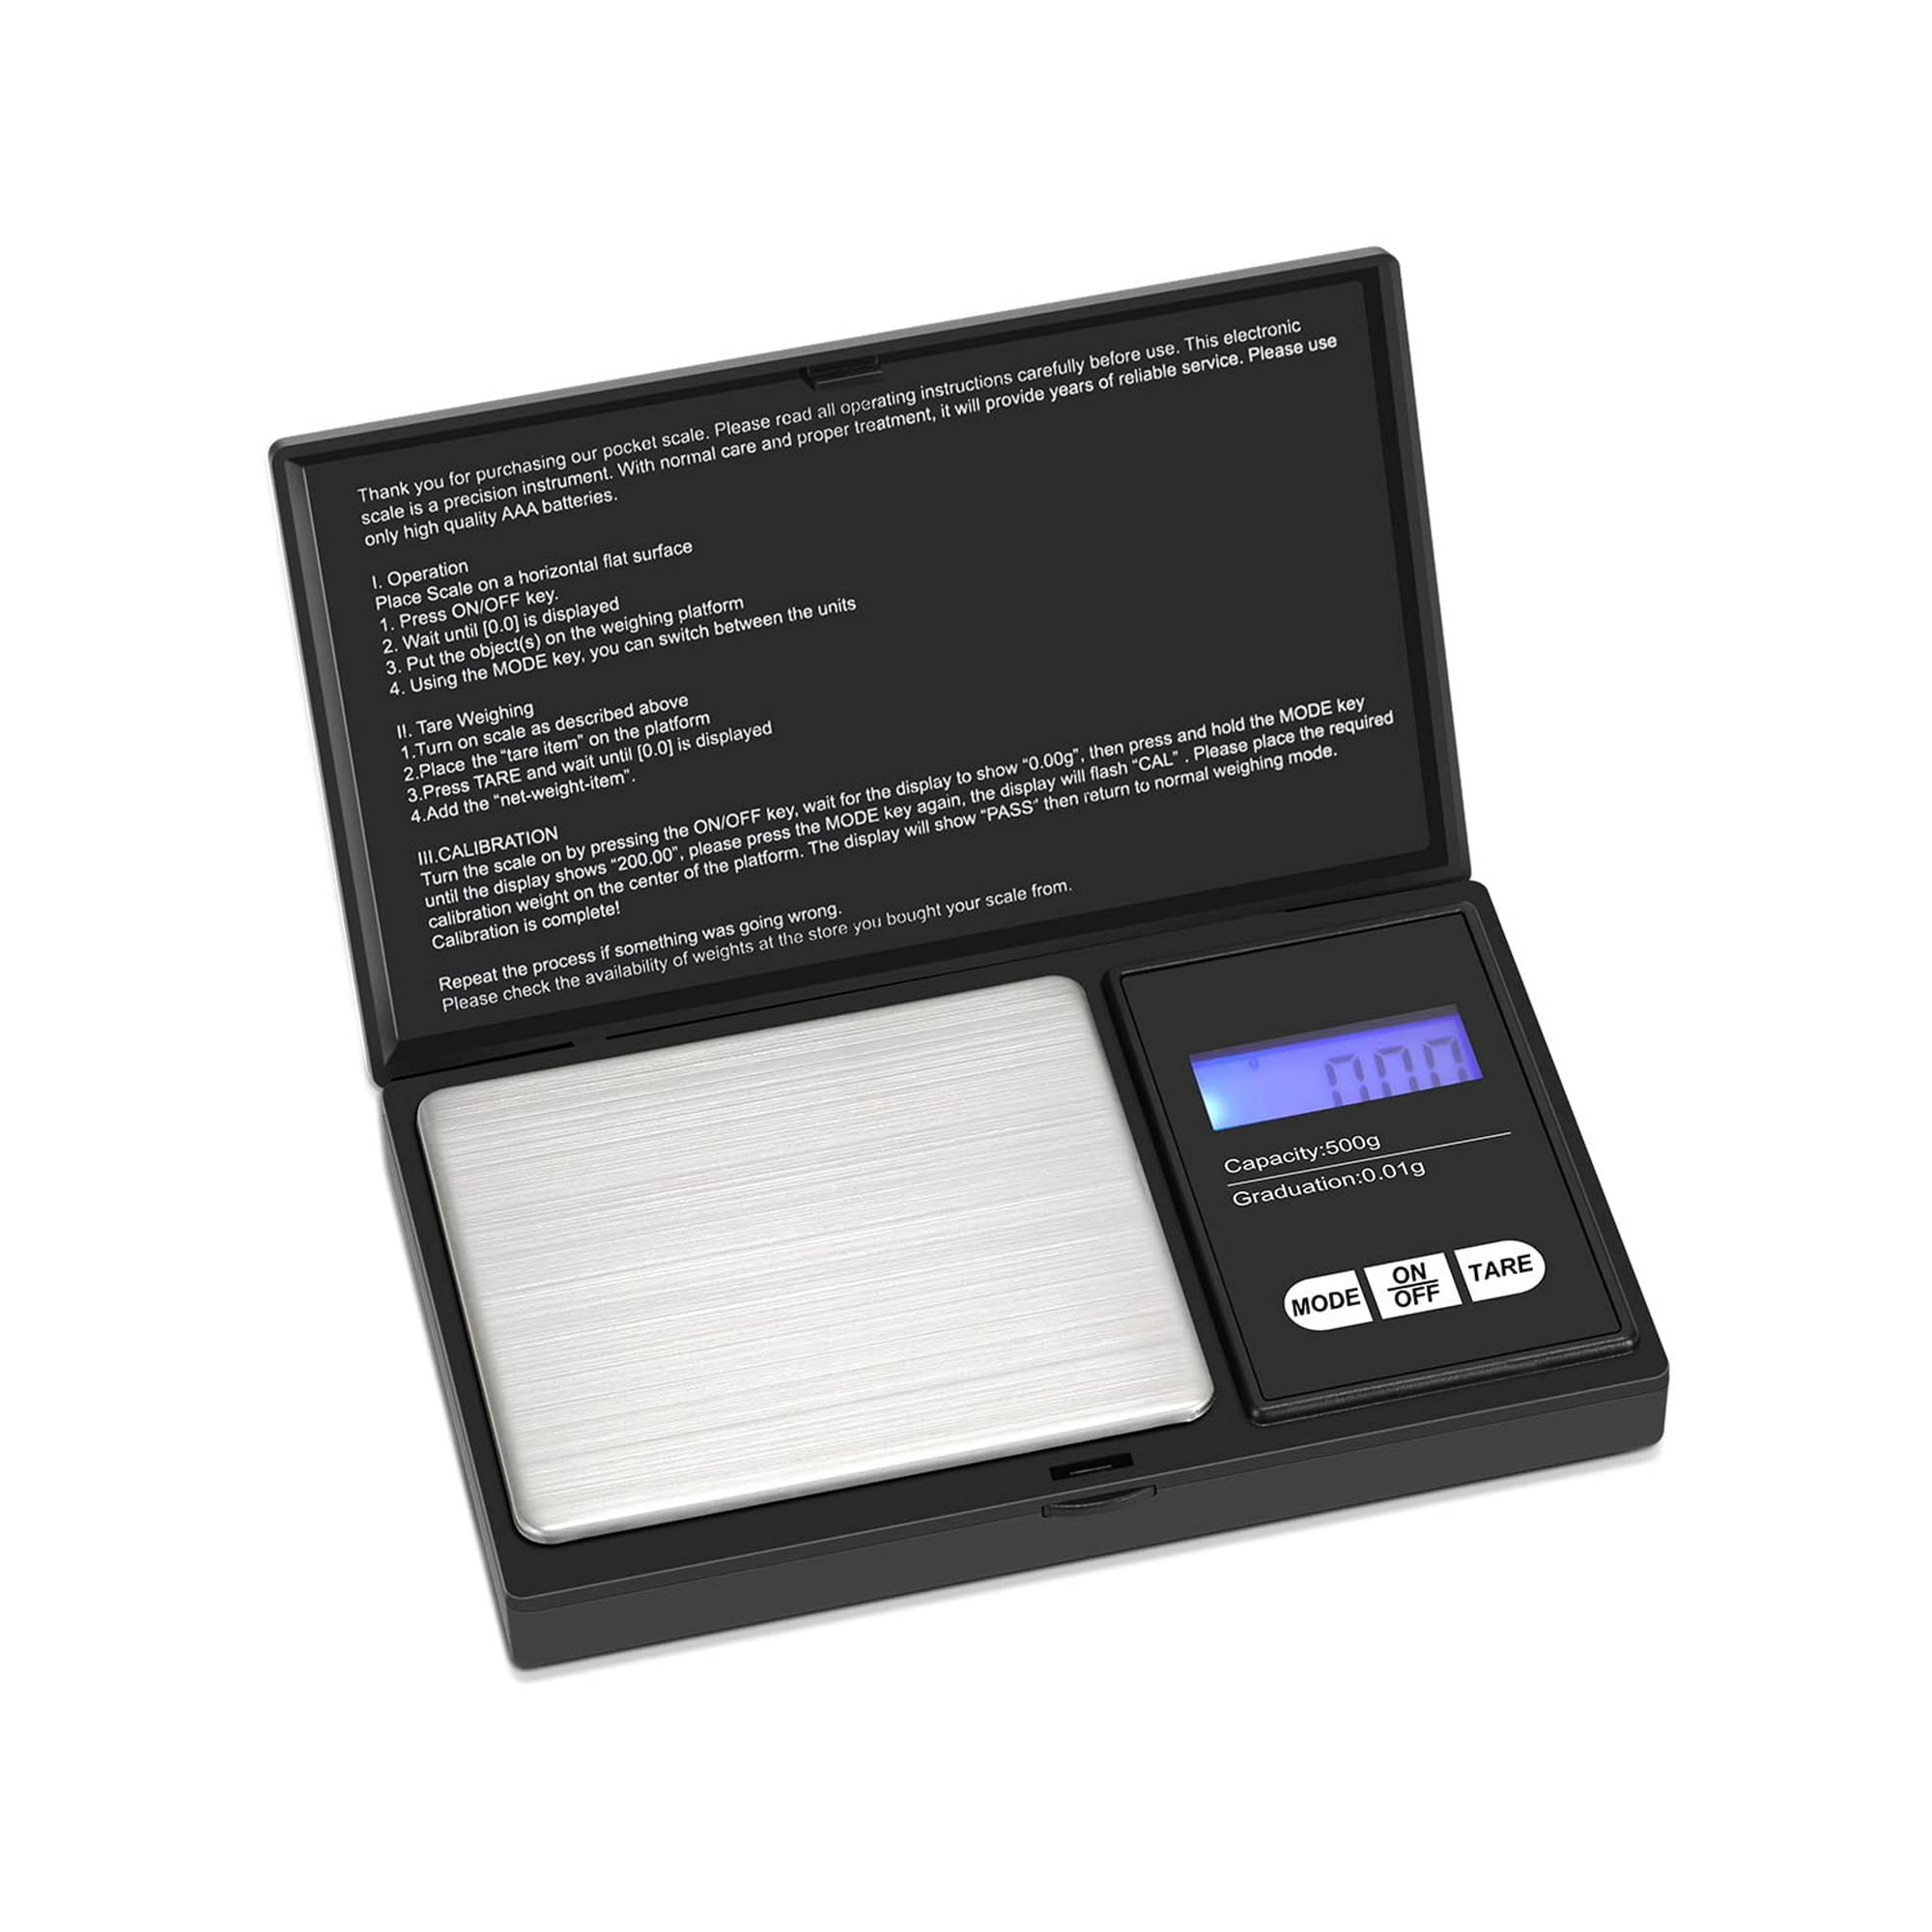 BLUELK Digital Food Scale,500gx0.01g Pocket Scale, Portable Small